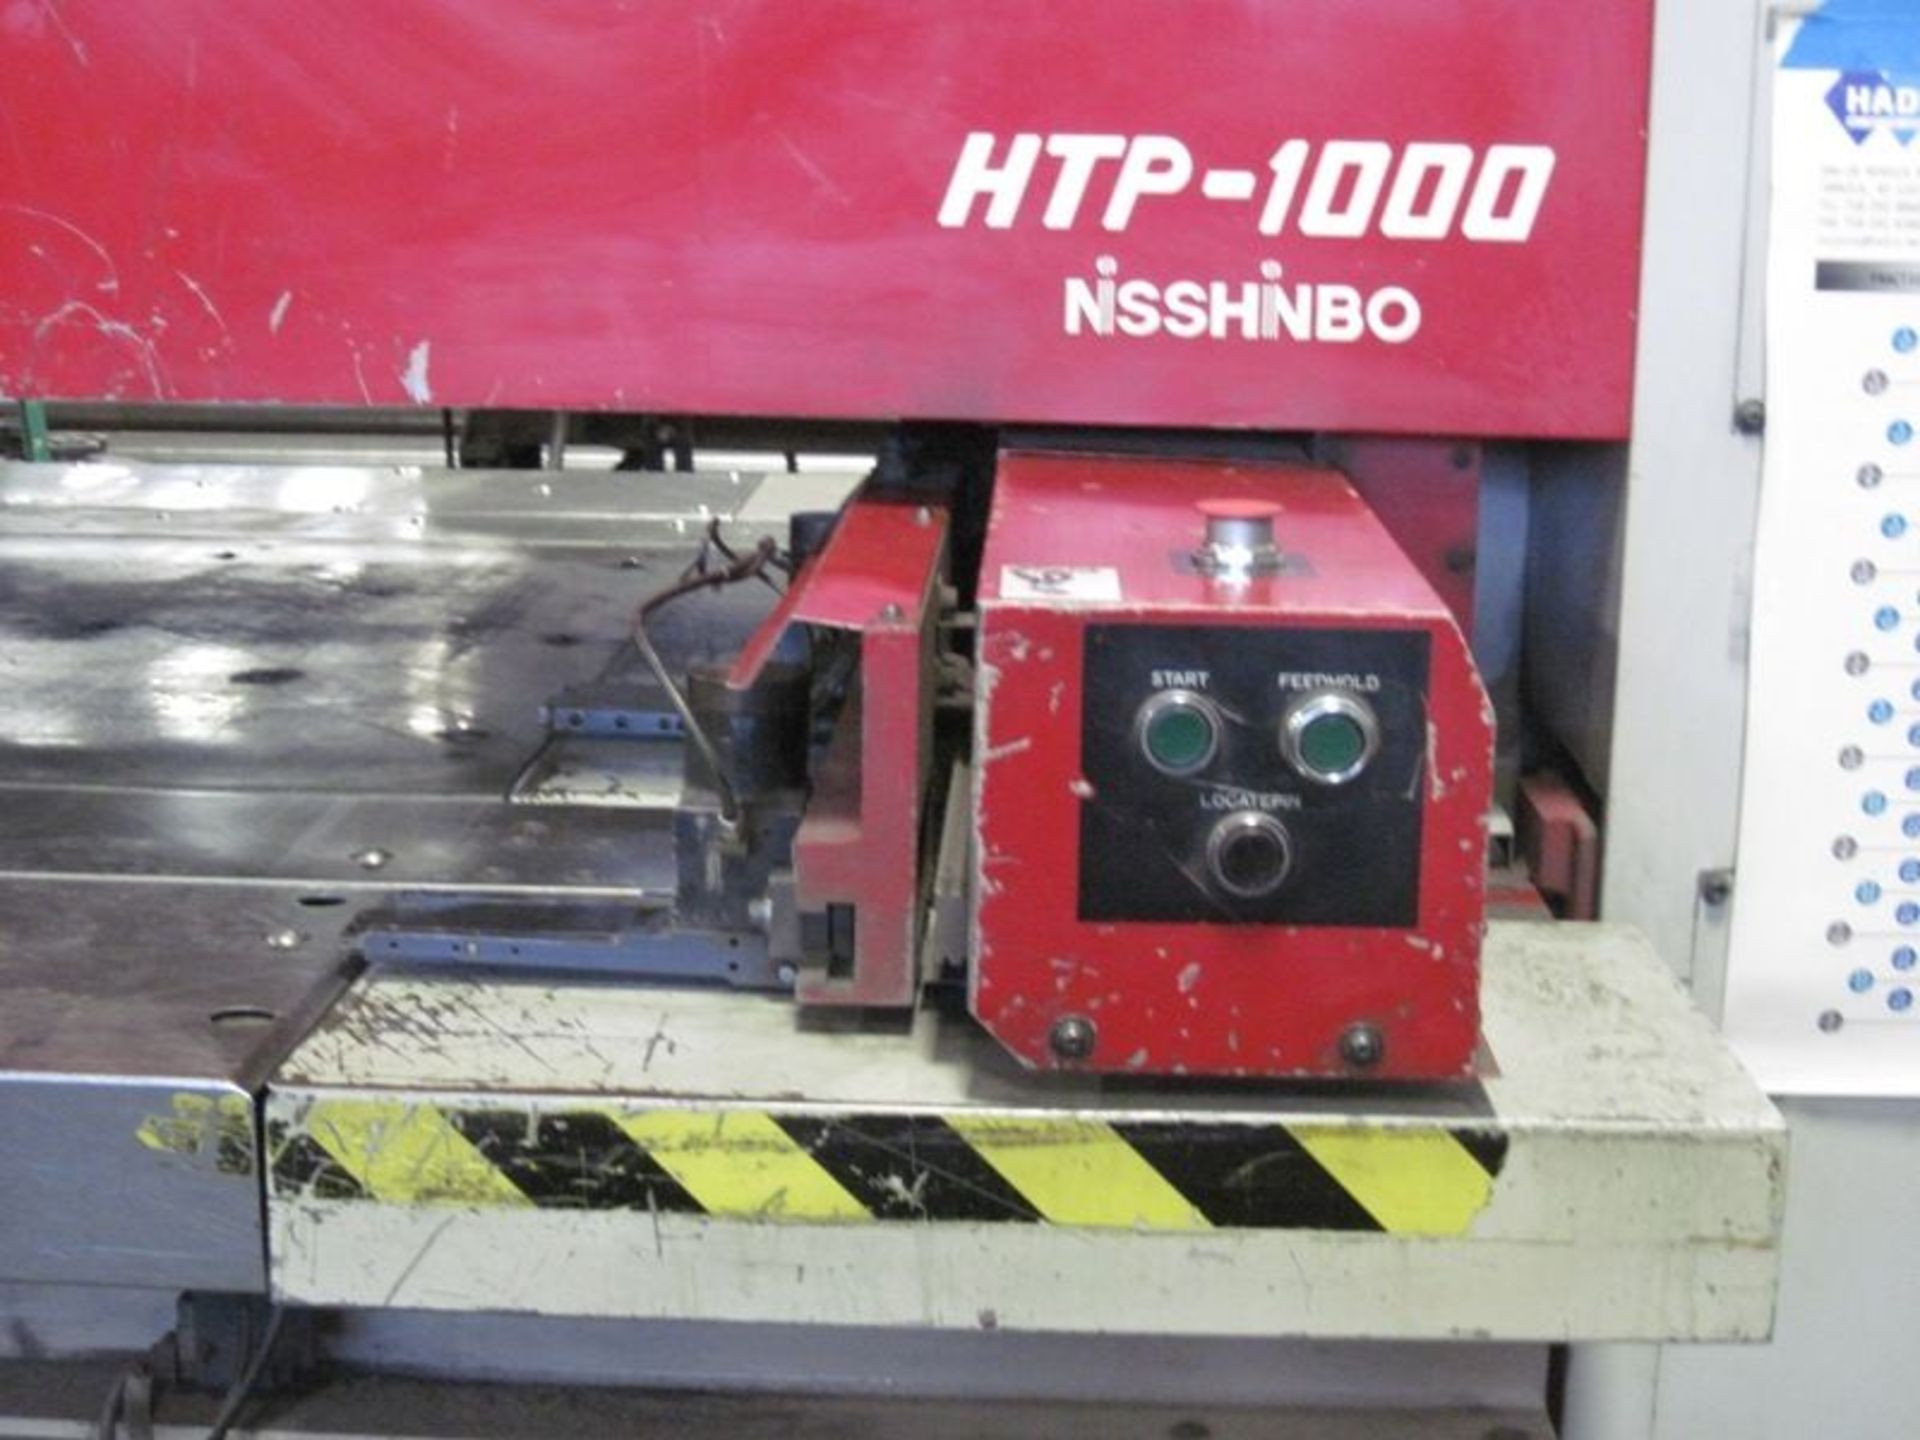 22 Tons 40"Thr Nisshinbo HTP-1000 CNC TURRET PUNCH - Image 6 of 8